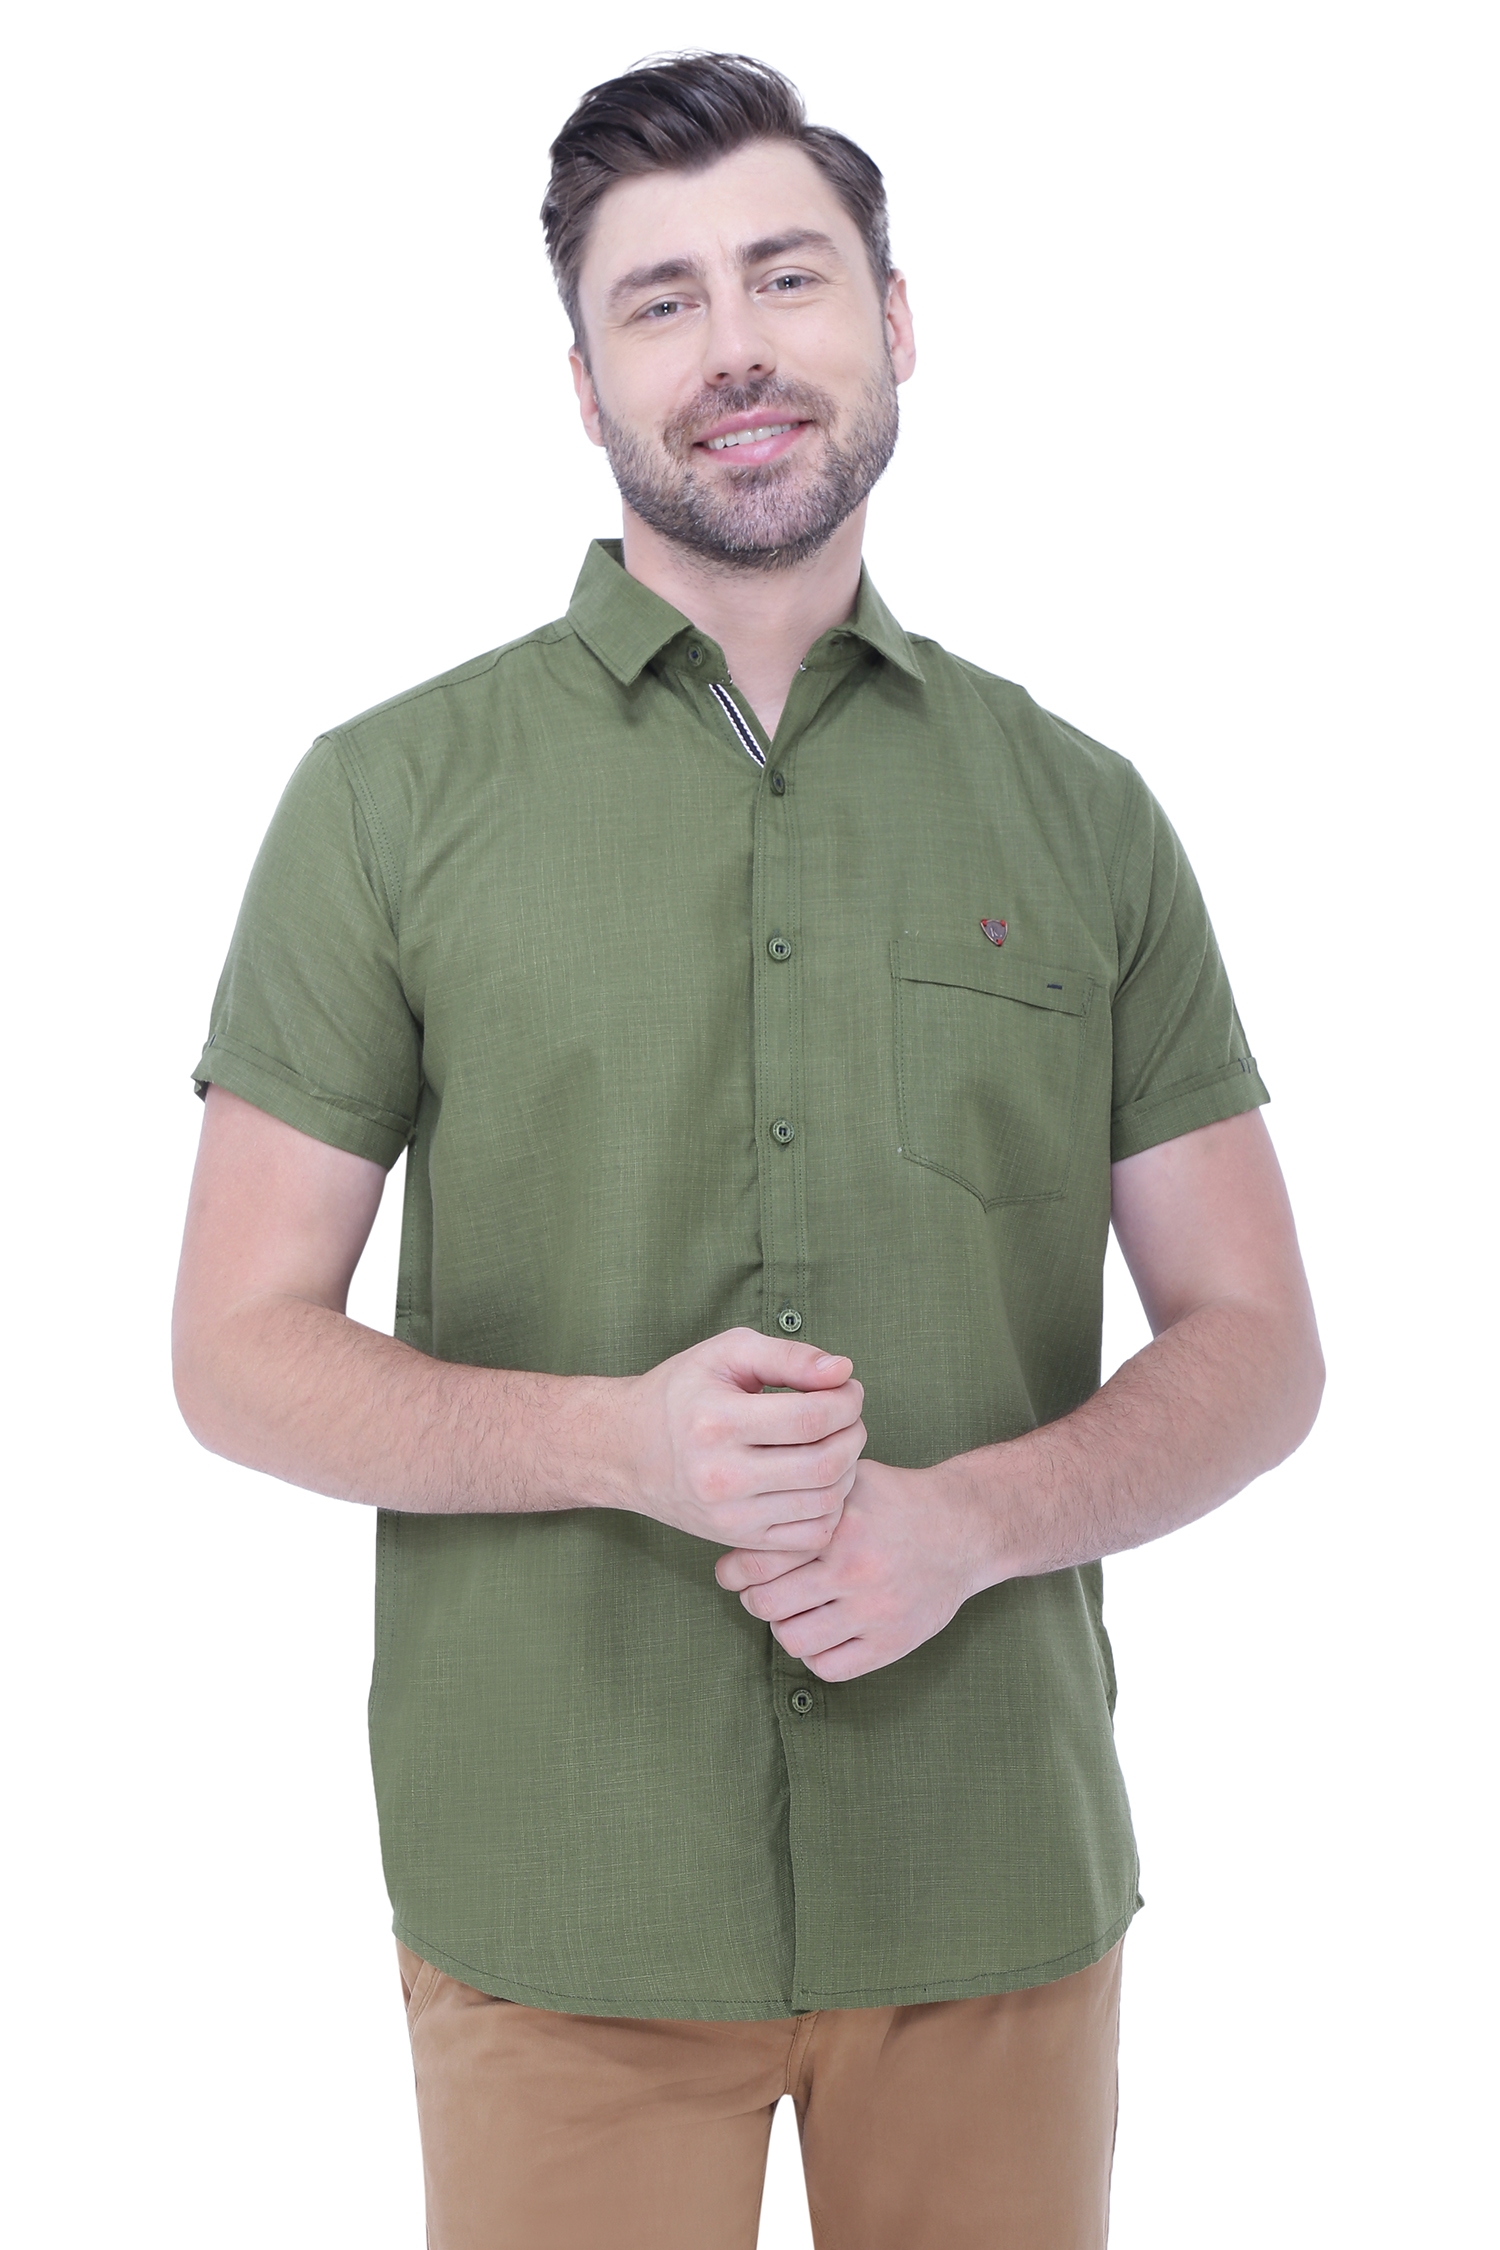 Kuons Avenue | Kuons Avenue Men's Linen Blend Half Sleeves Casual Shirt-KACLHS1239